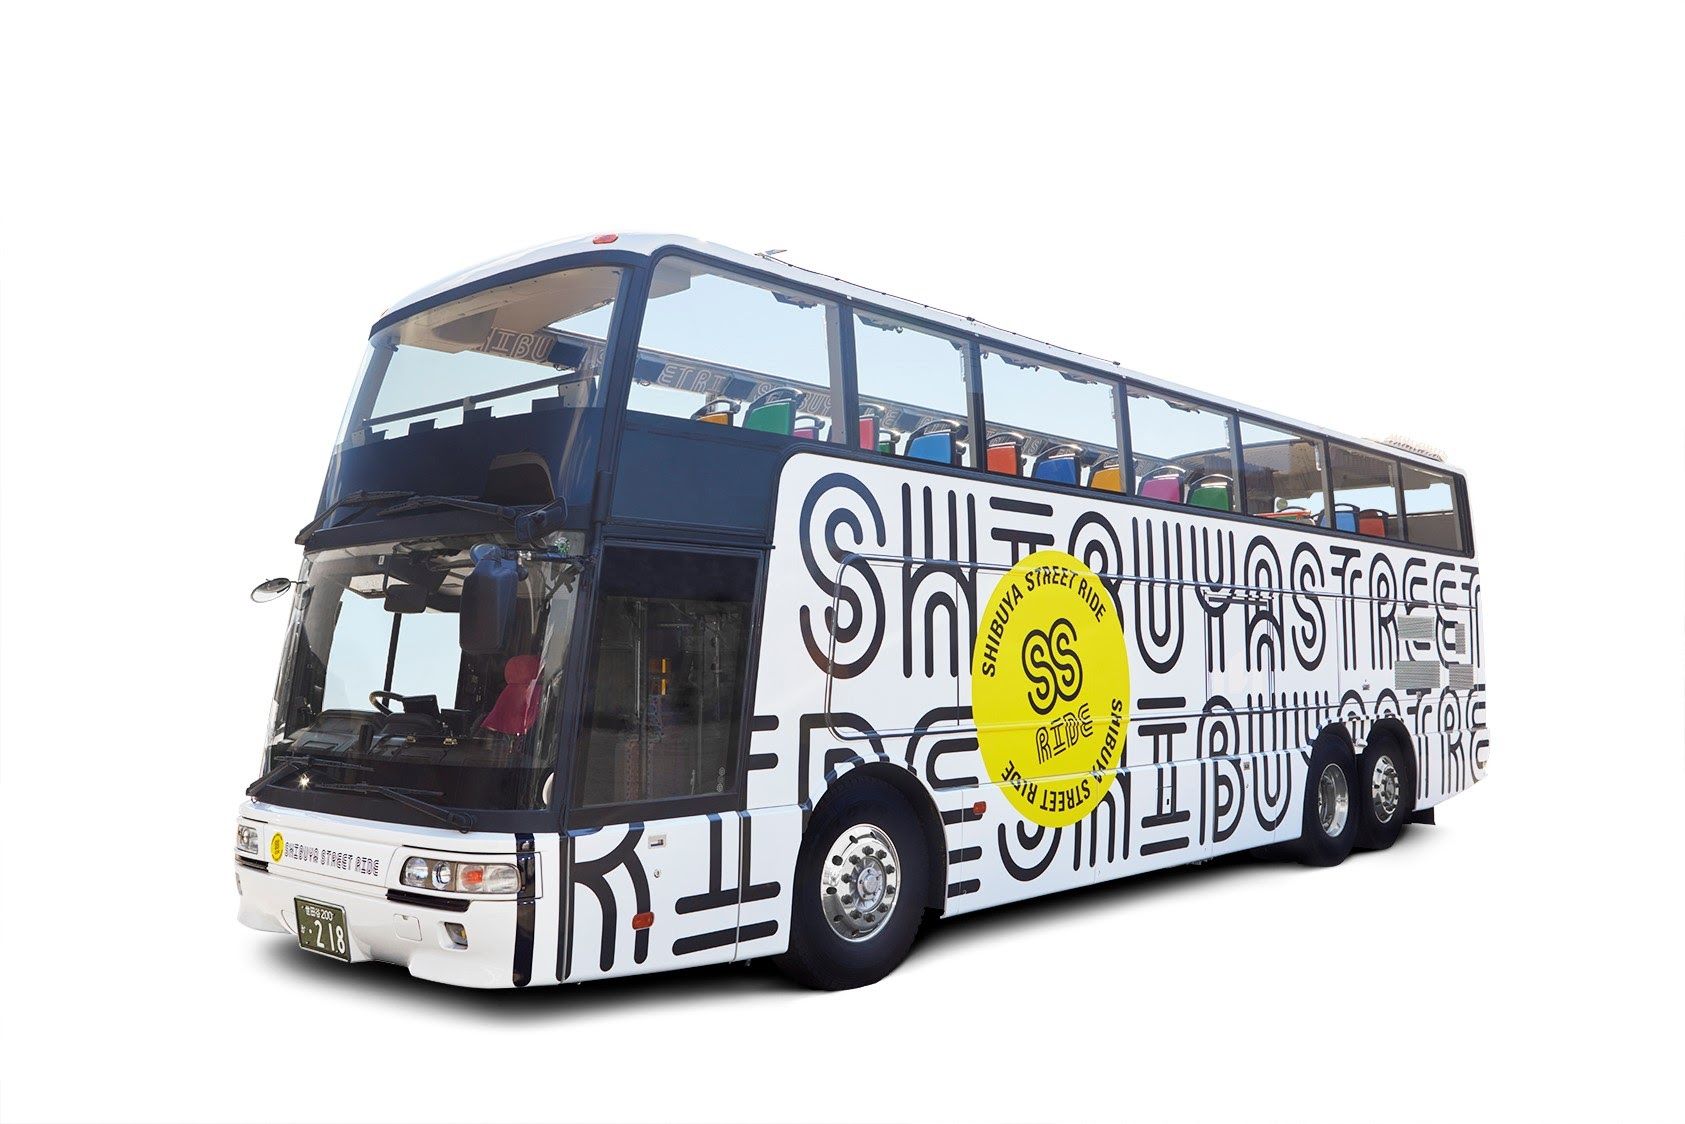 澀谷露天觀光巴士 SHIBUYA STREET RIDE